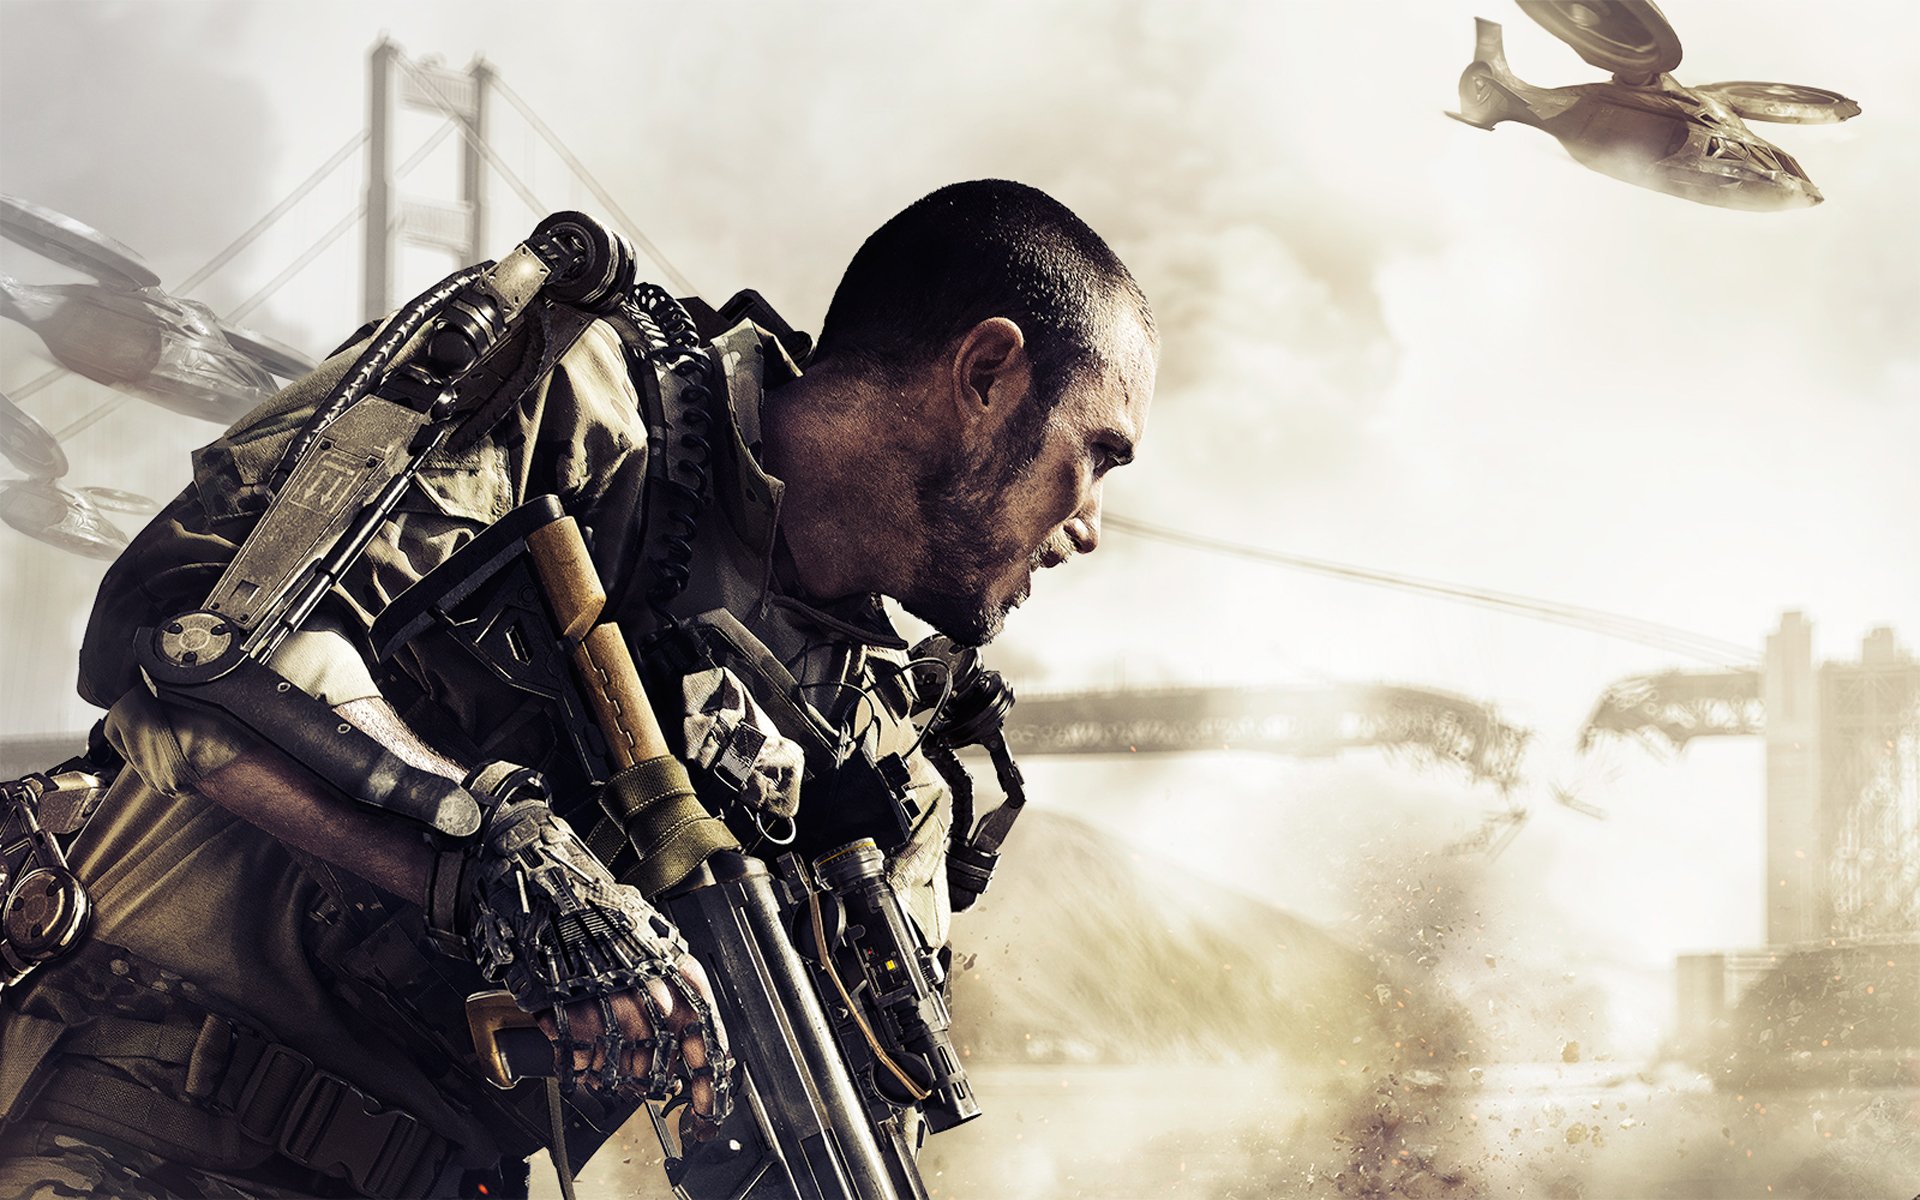 Call Of Duty Advanced Warfare Hd Wallpaper Background Image